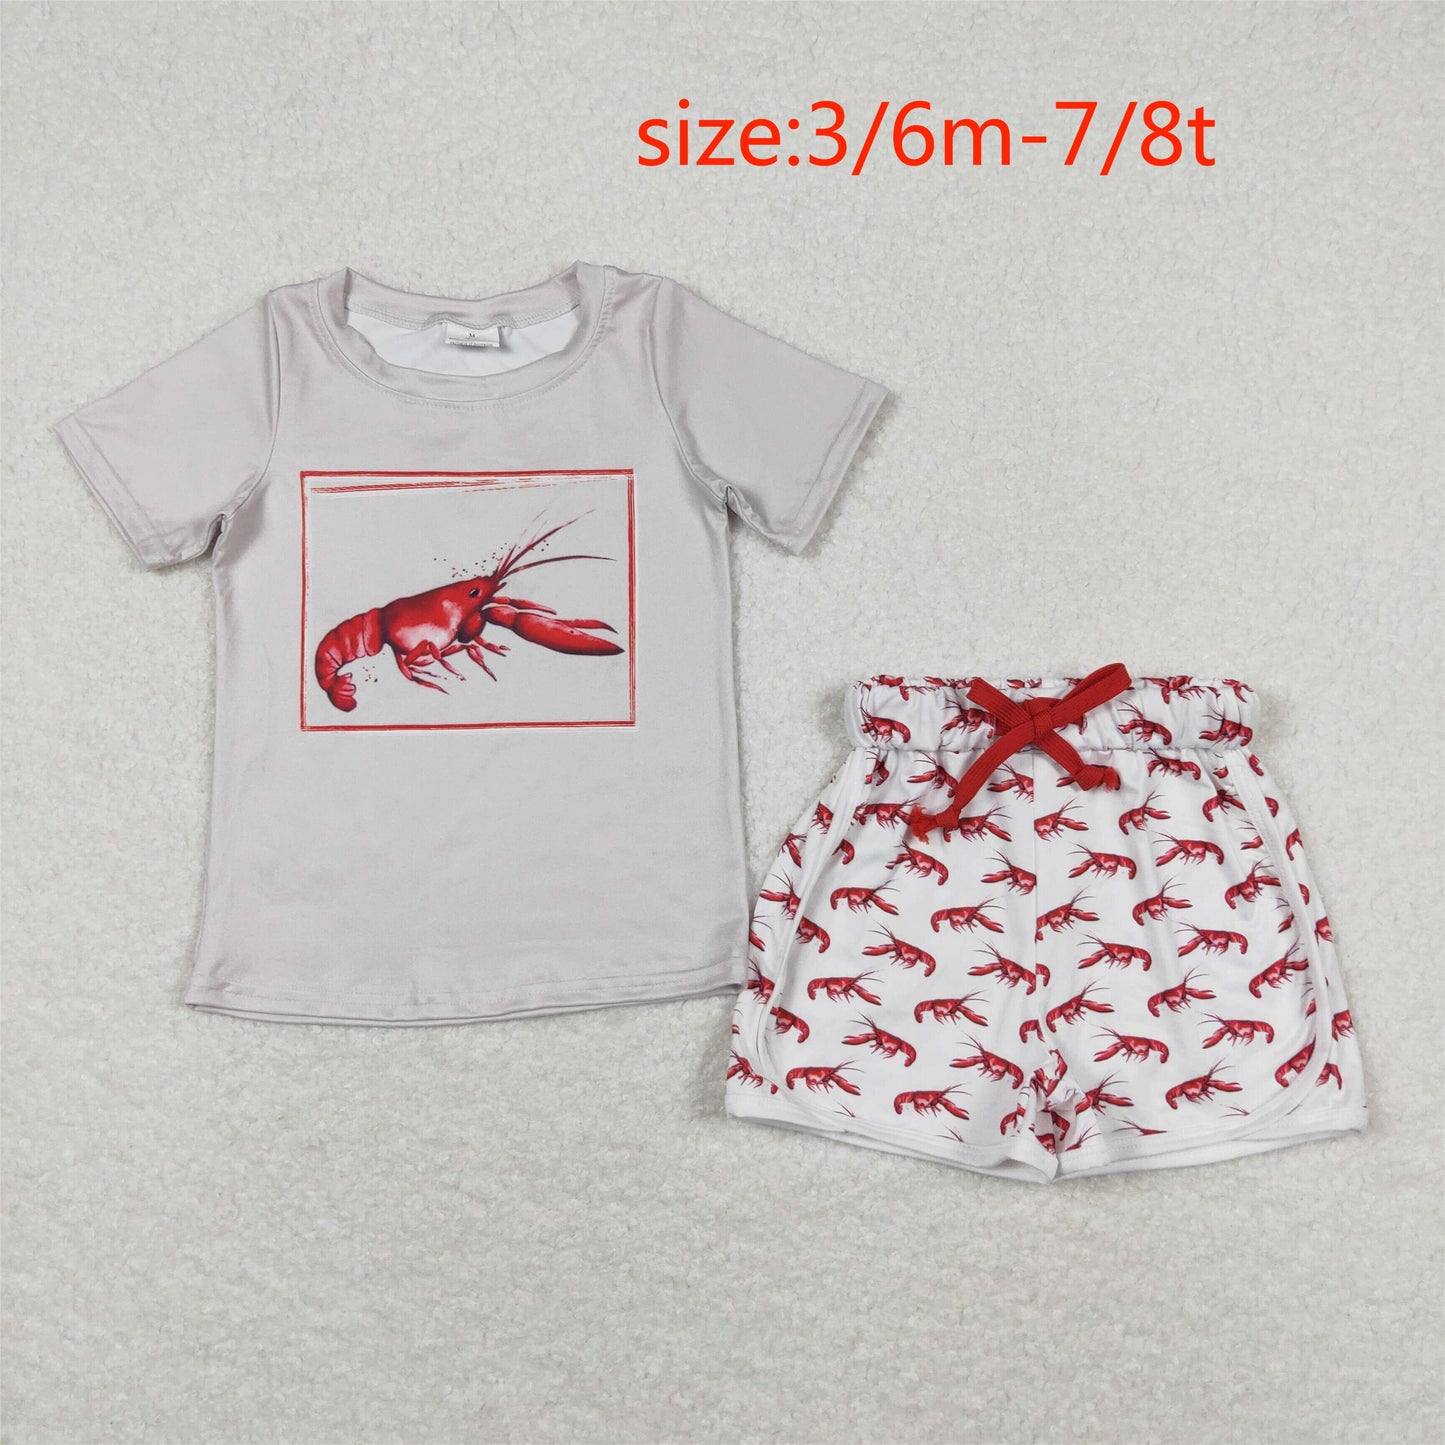 BSSO0745 Crayfish gray short sleeve white shorts suit